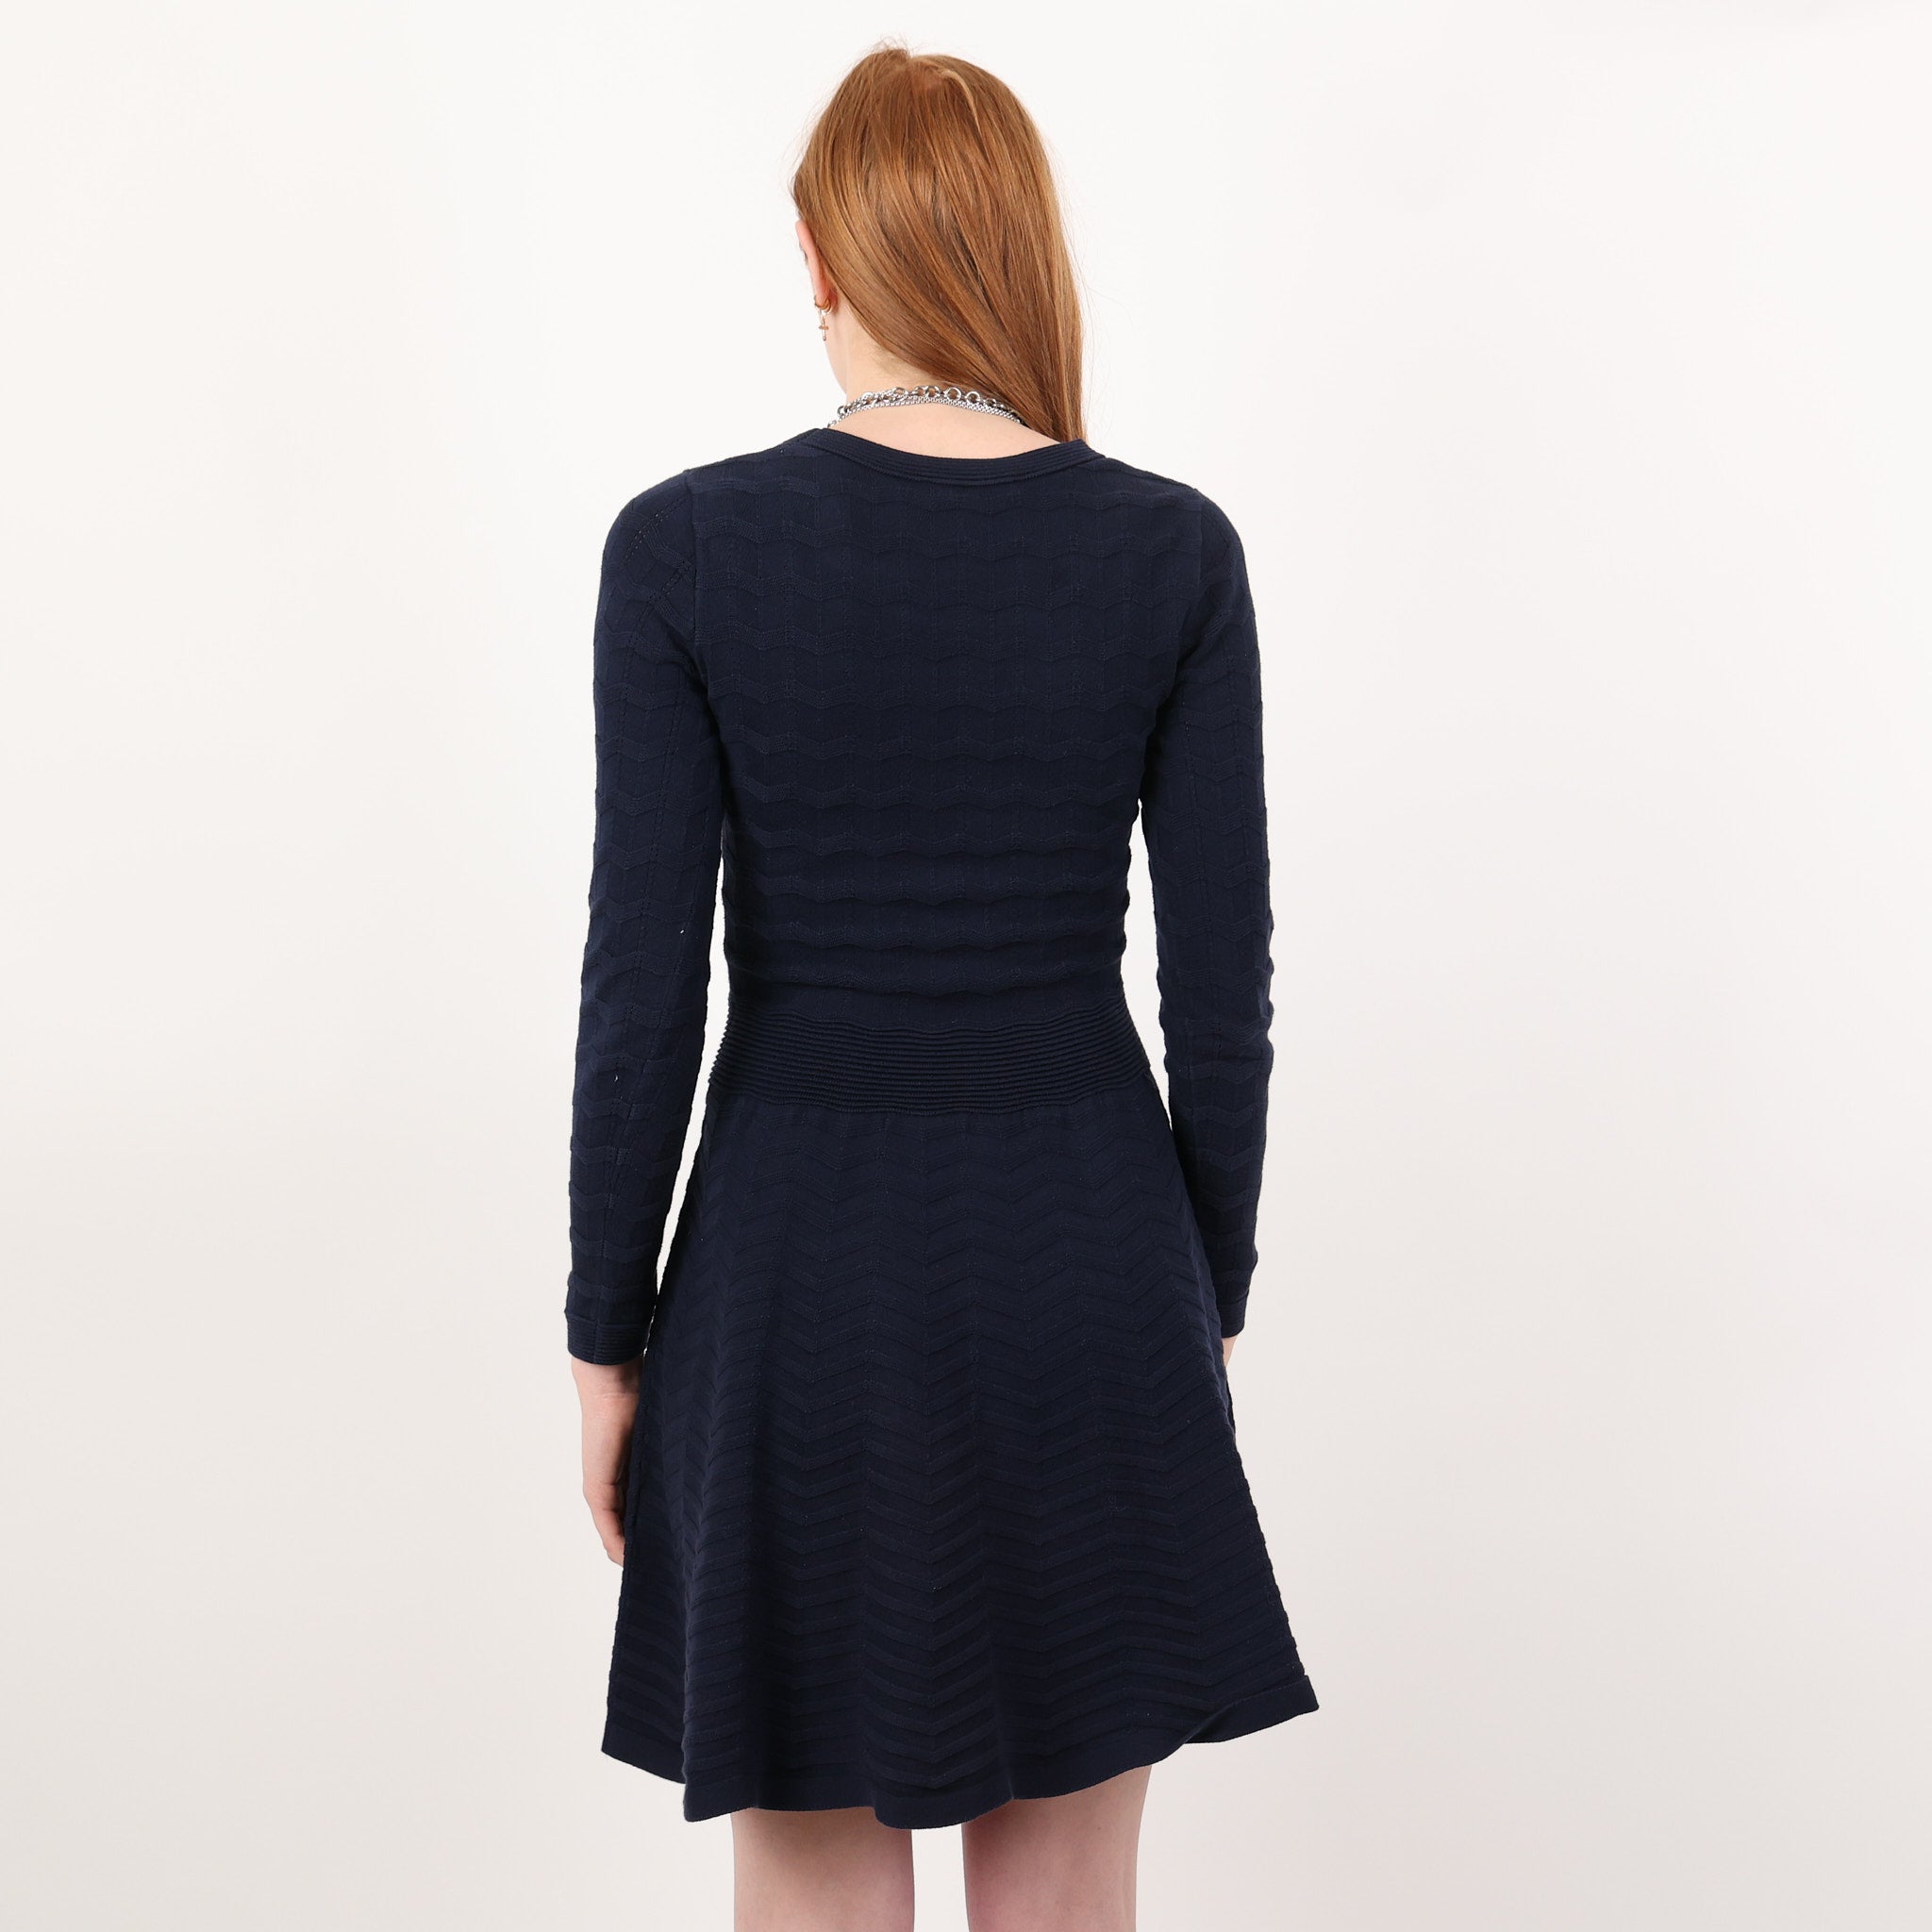 Dress, UK Size 8